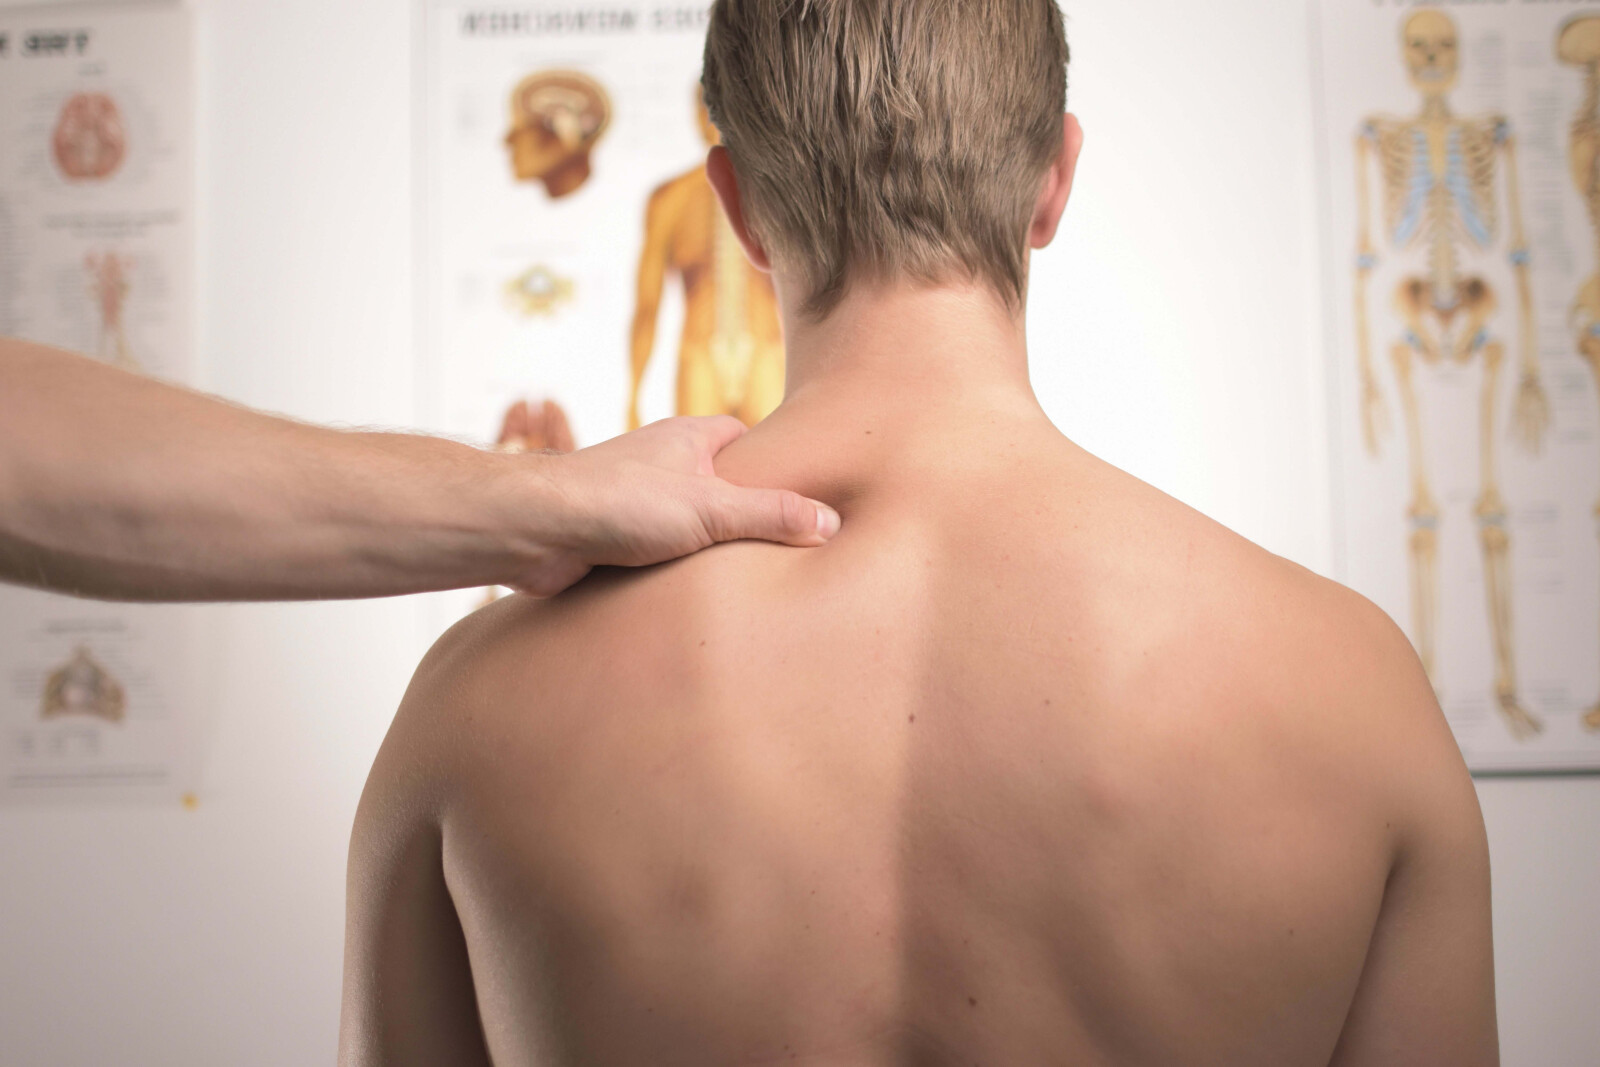 Devastating Spinal Cord Injuries Strike Neck